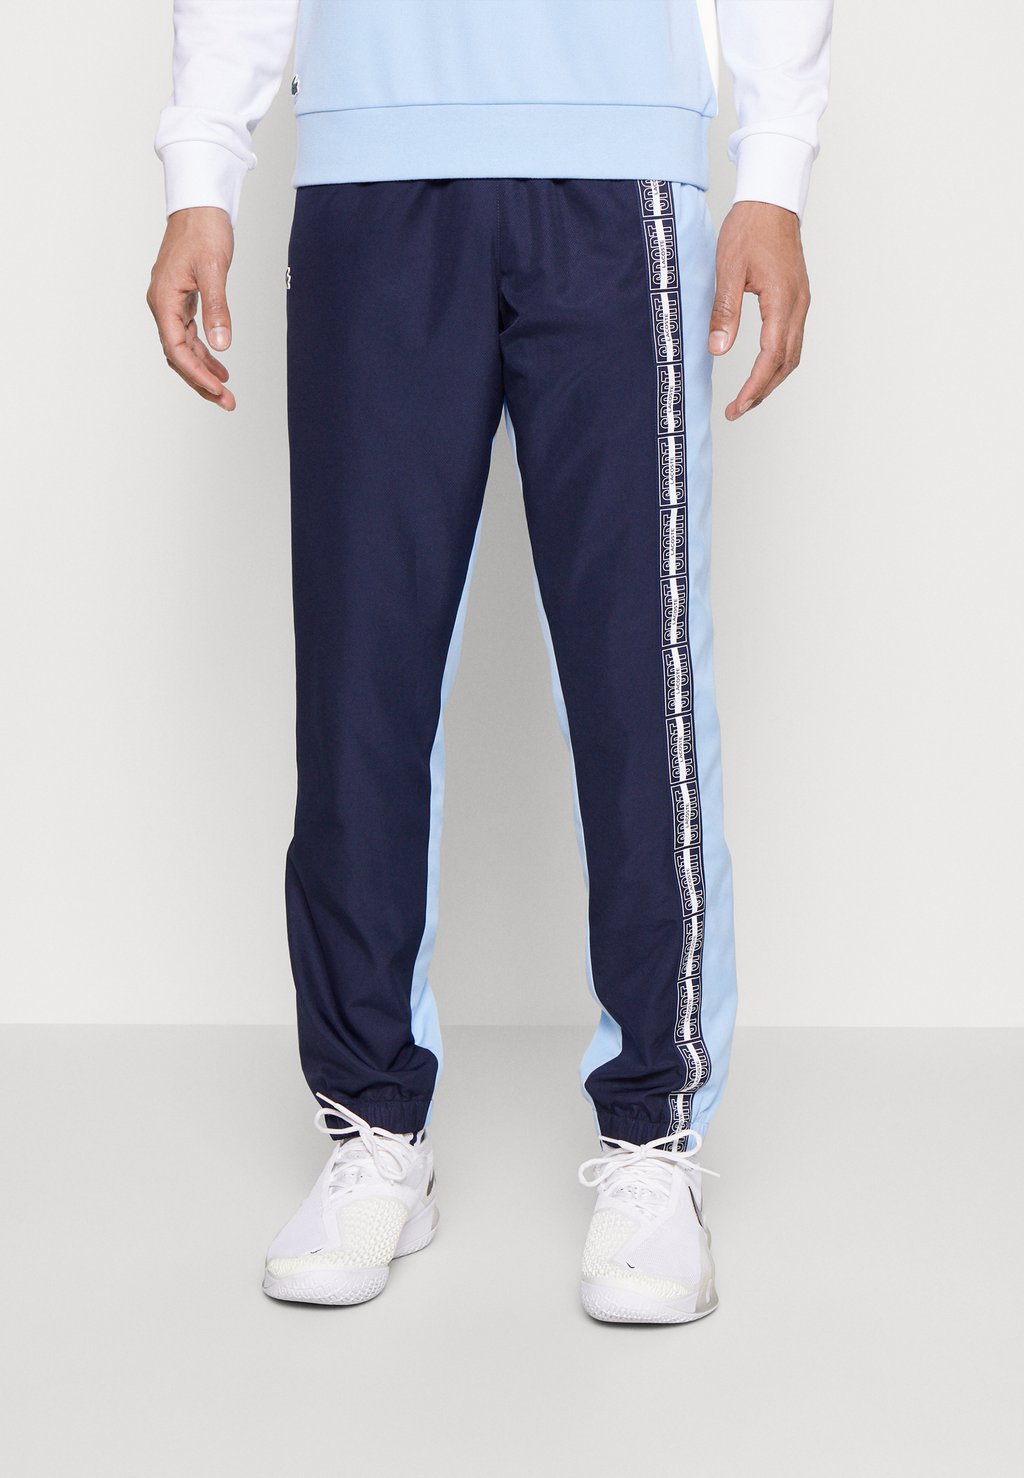 Спортивные брюки Tennis Pant Lacoste, цвет navy blue/overview шорты lacoste sport lined tennis shorts цвет navy blue